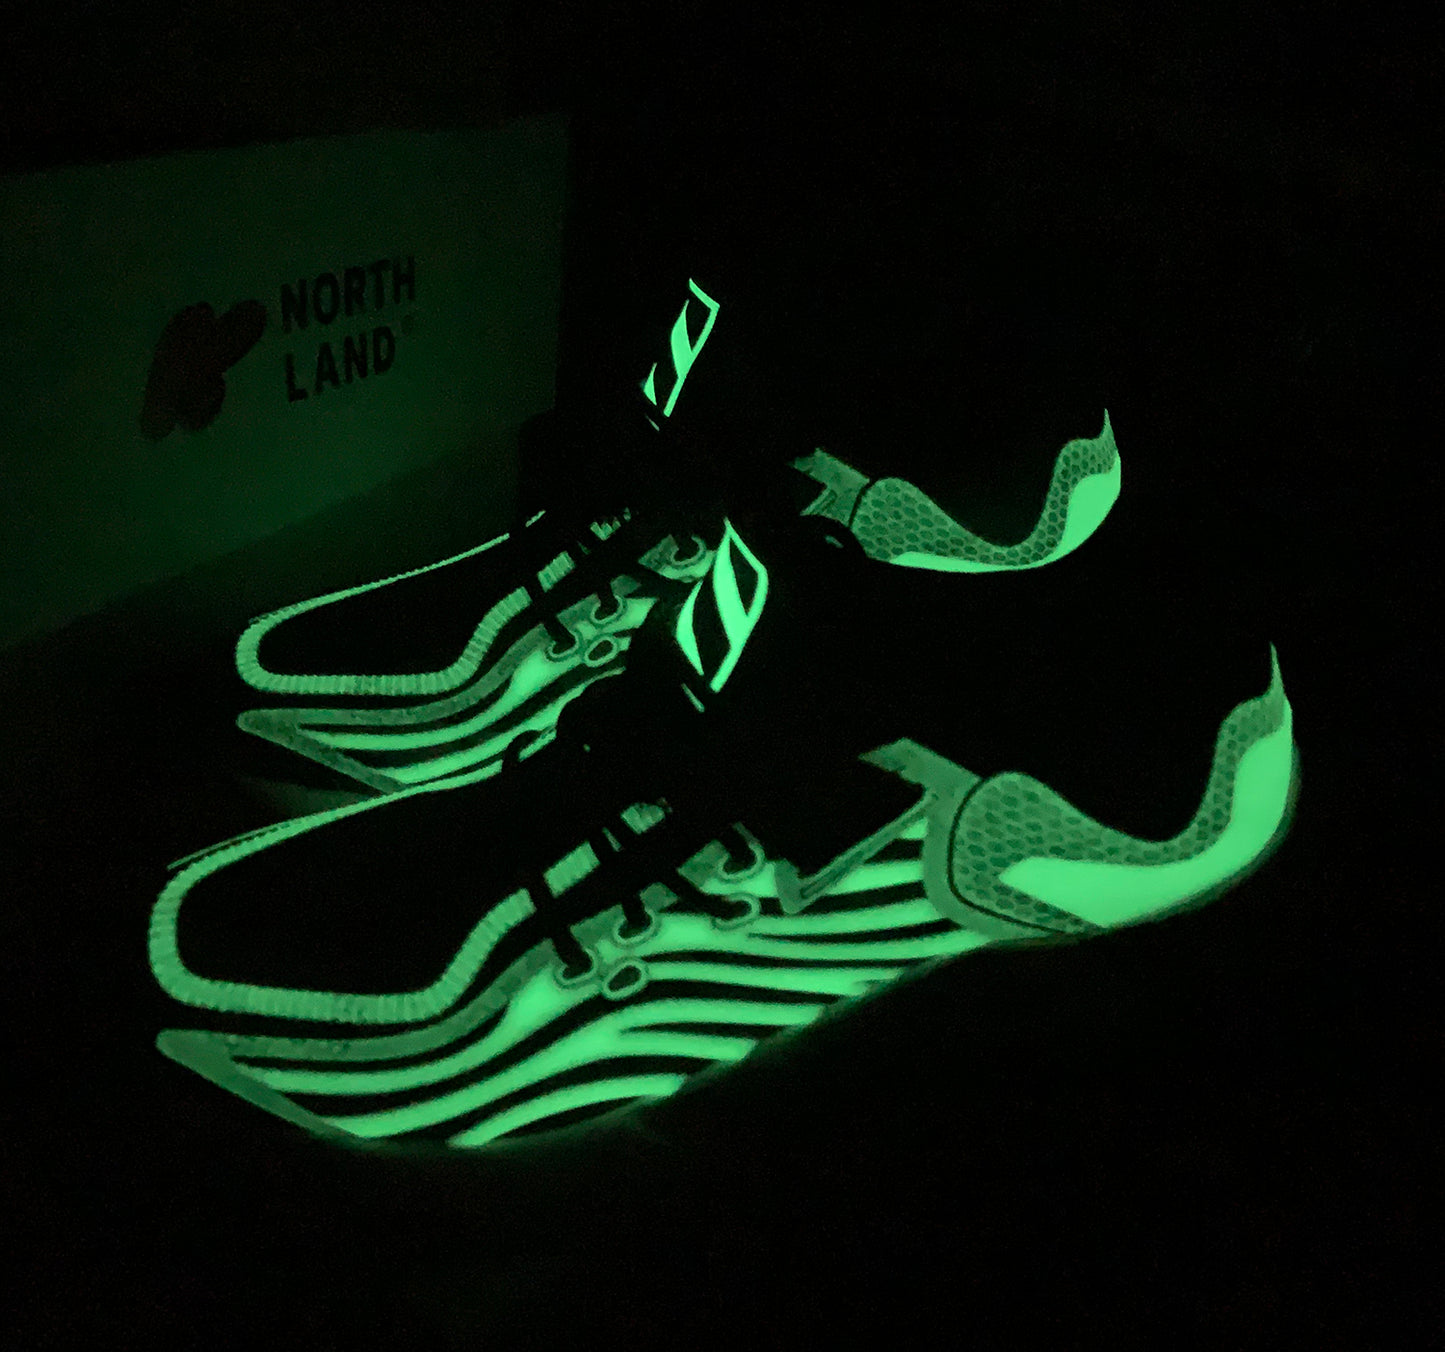 Krooberg Lumino - Unisex Shoes/Sneakers